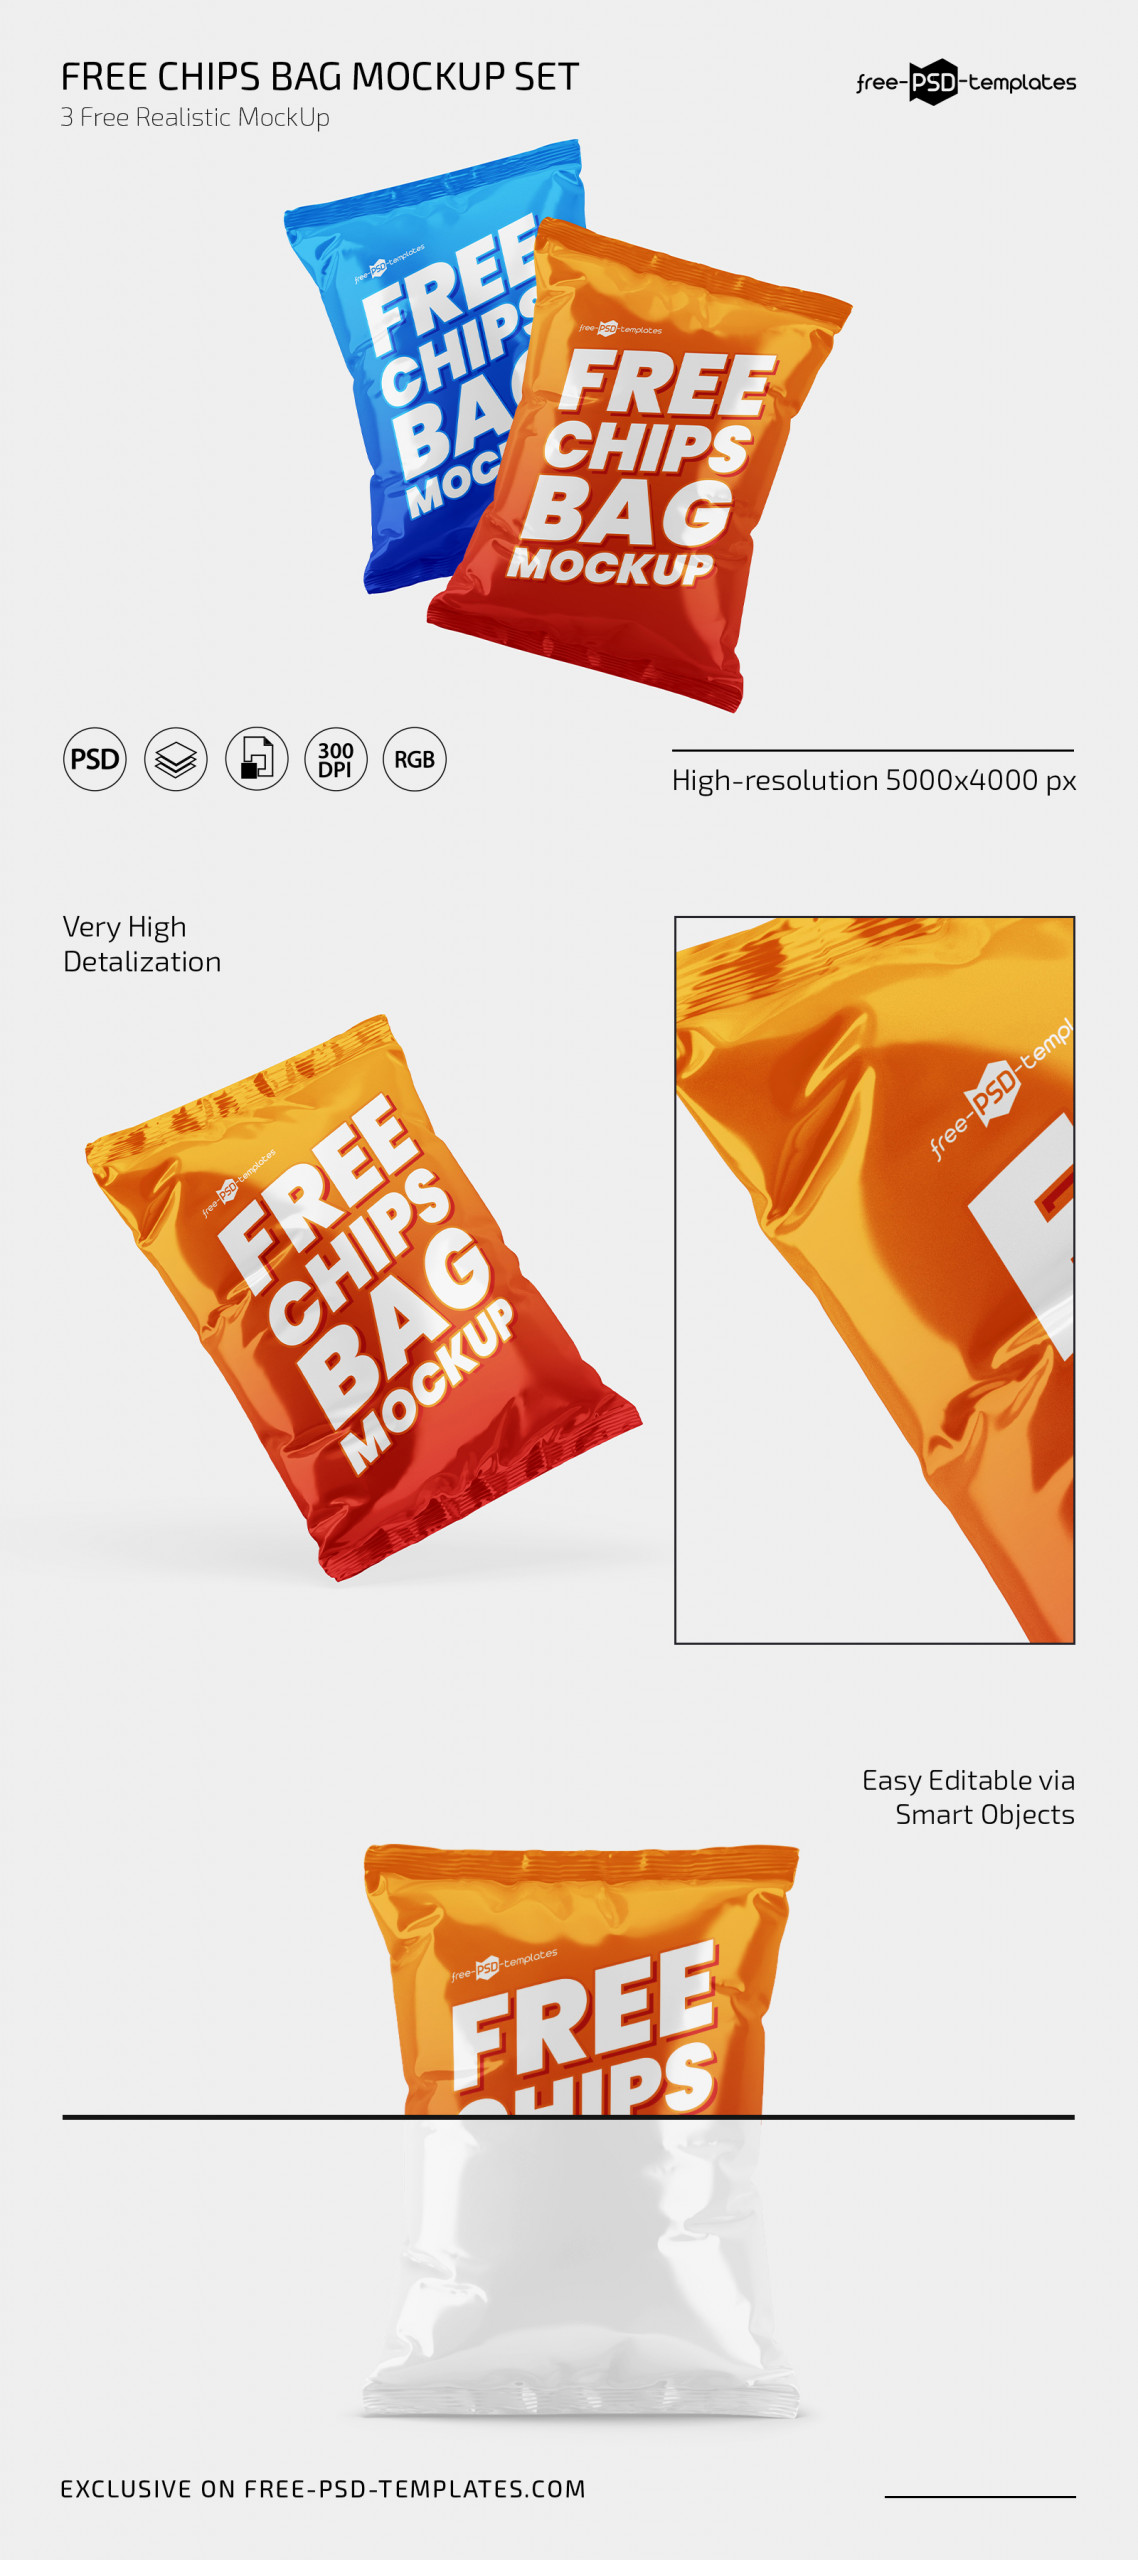 Web Pv Free Chips Bag Mockup scaled